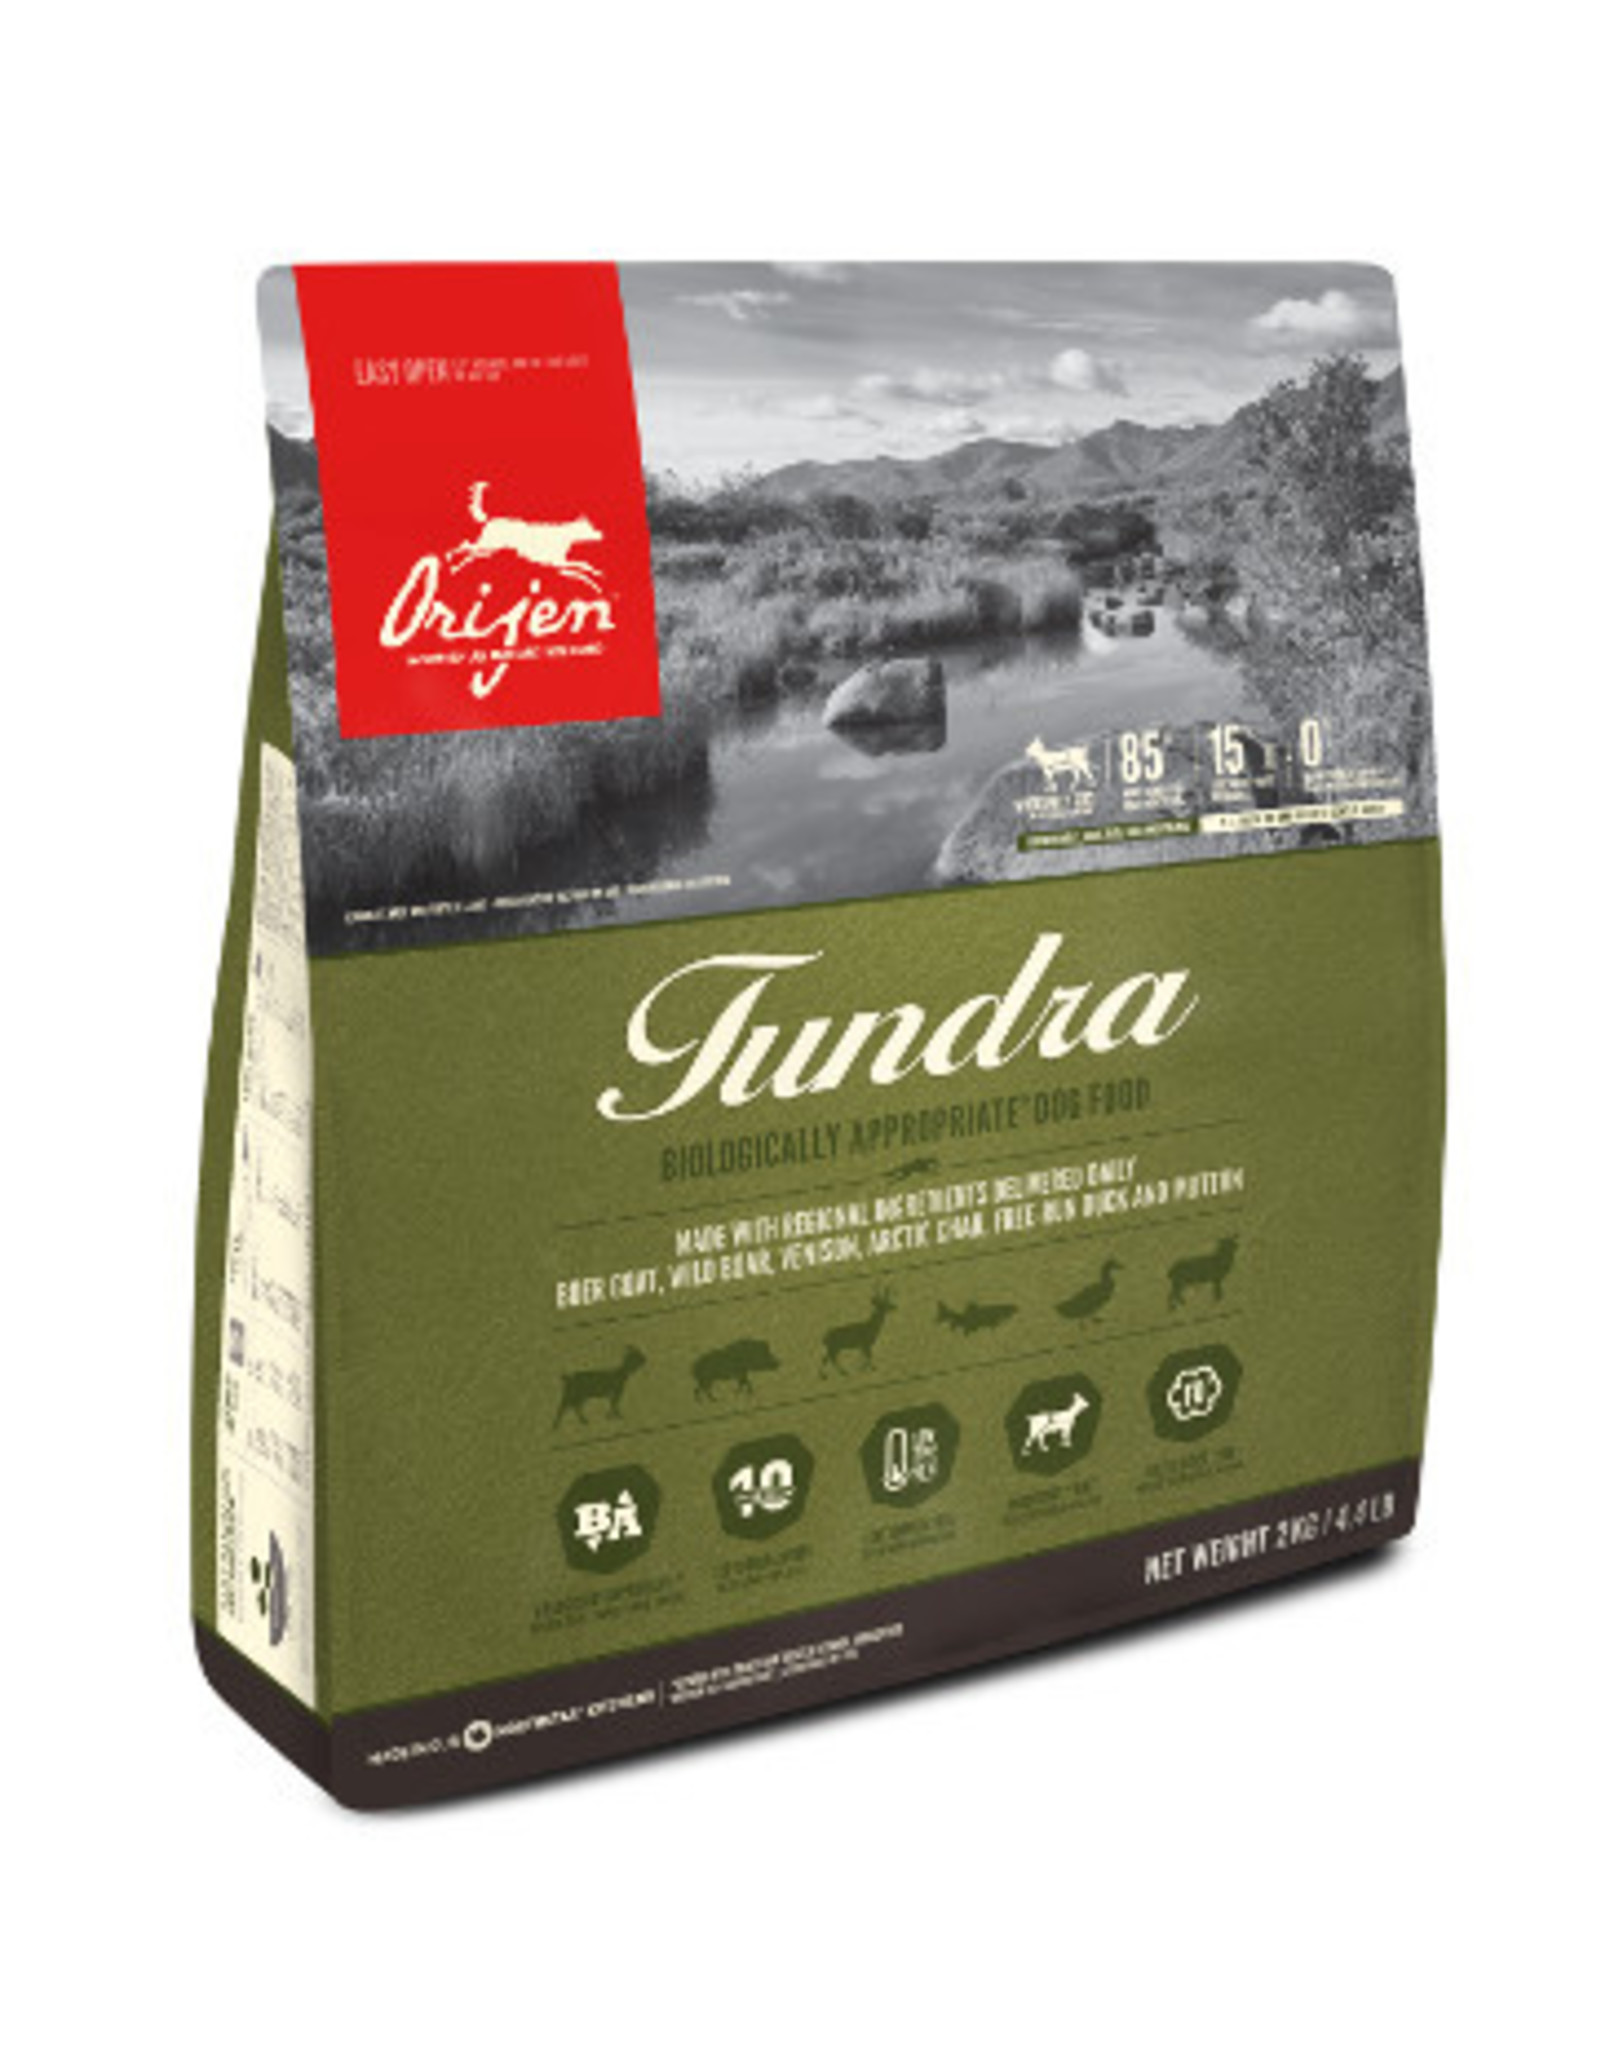 Orijen Dog Food Tundra Pawtopia Your Pet's Nutritionist